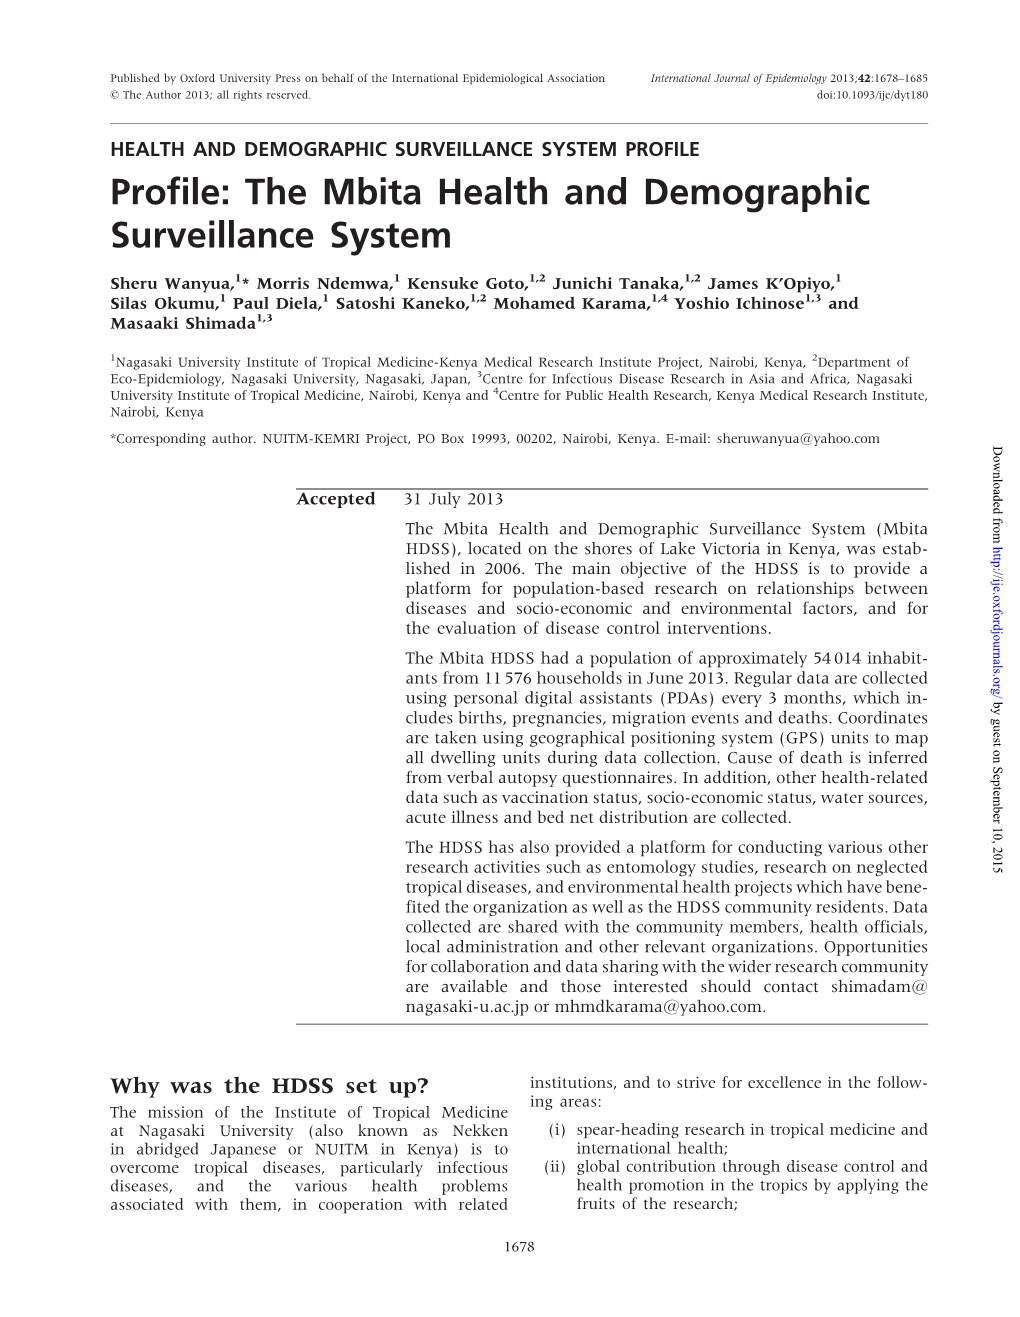 Profile: the Mbita Health and Demographic Surveillance System